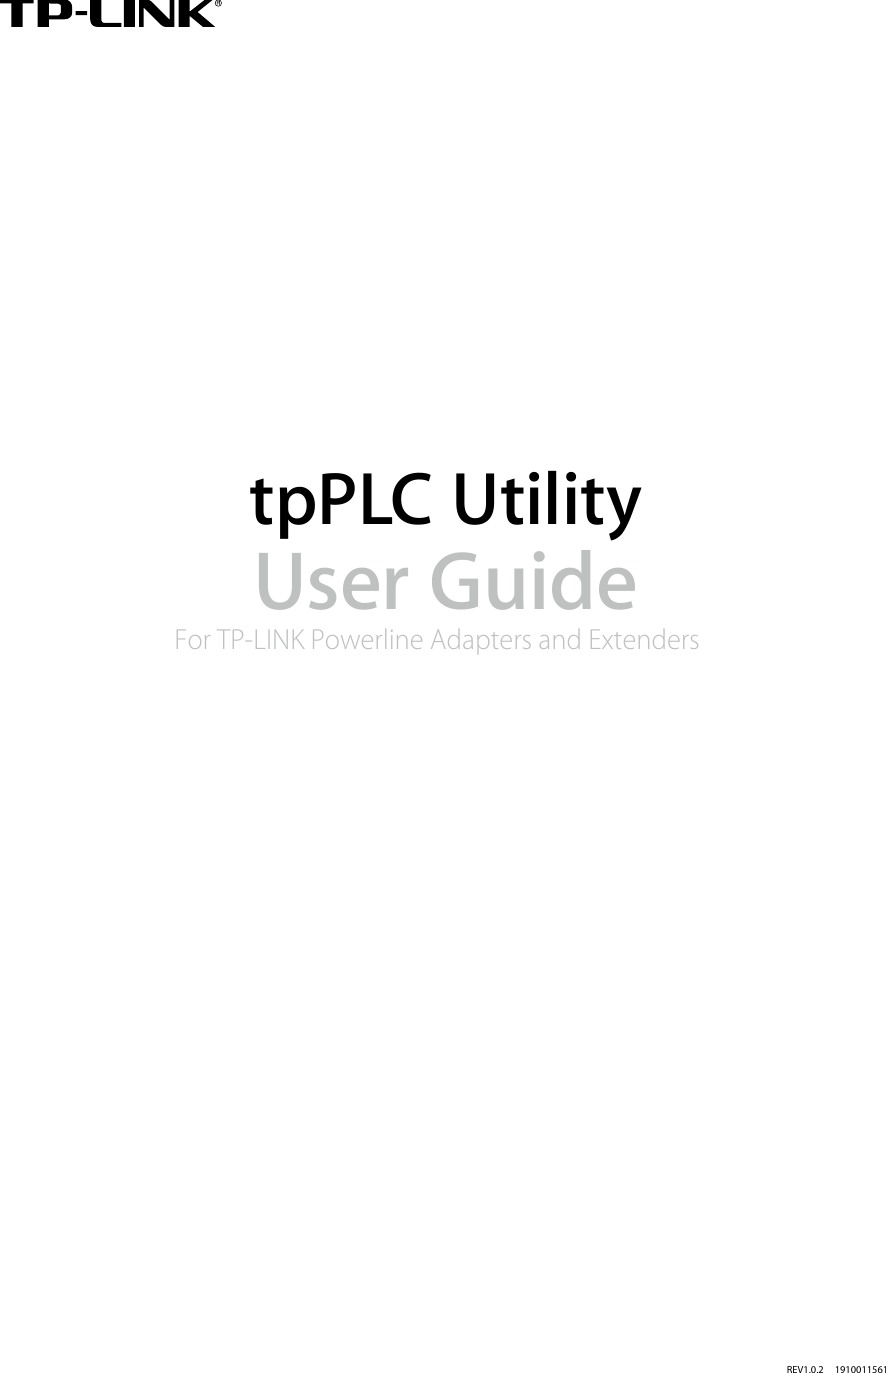 tpplc utility mac download